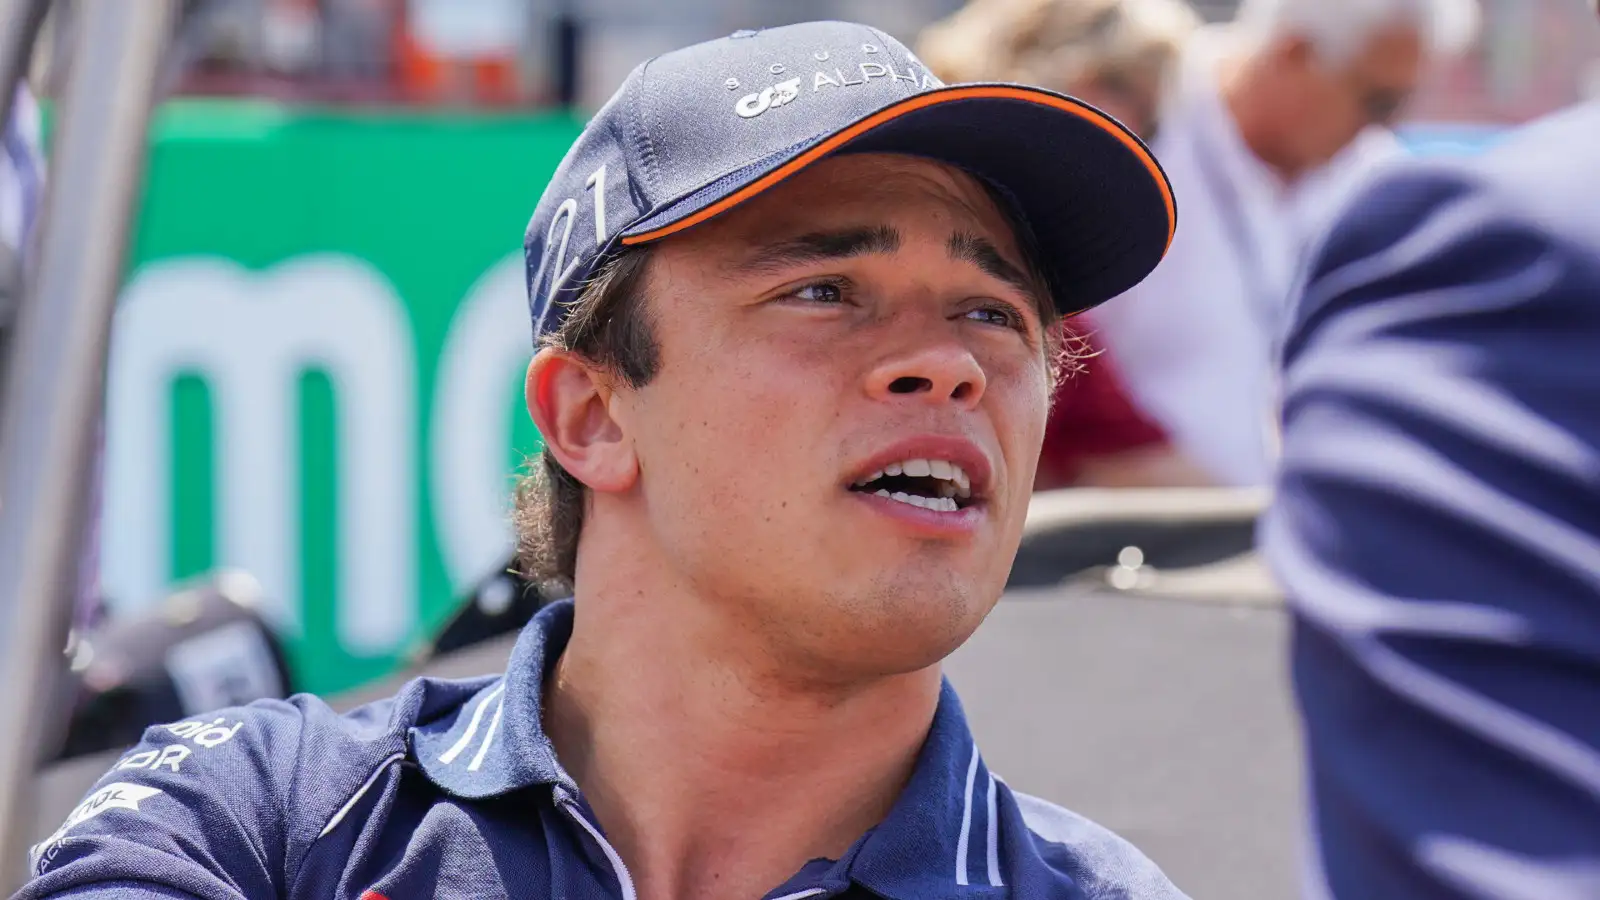 AlphaTauri's Nyck de Vries on the grid at the 2023 British Grand Prix.